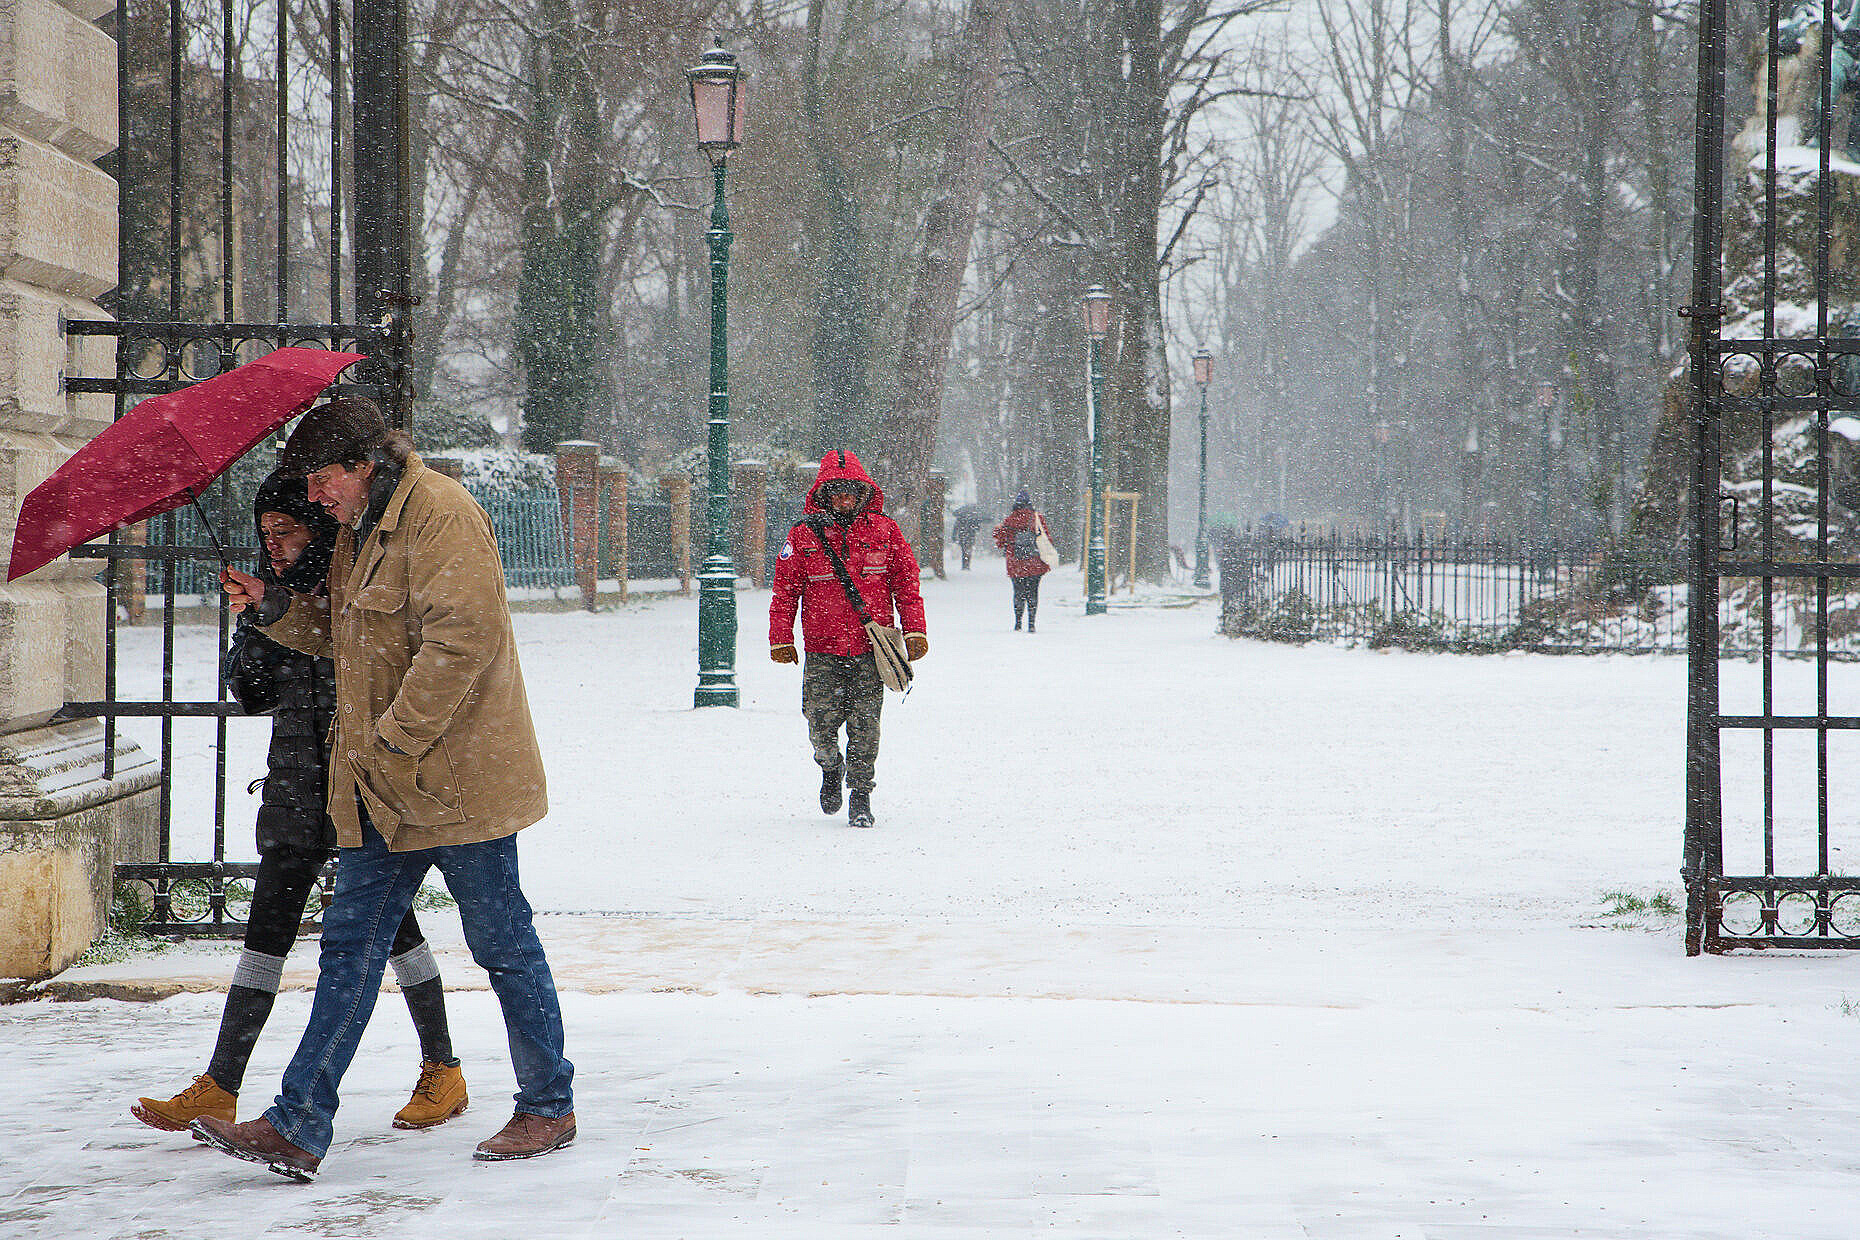 People walking huddling together under an umbrella in the snow in Via Garibaldi.